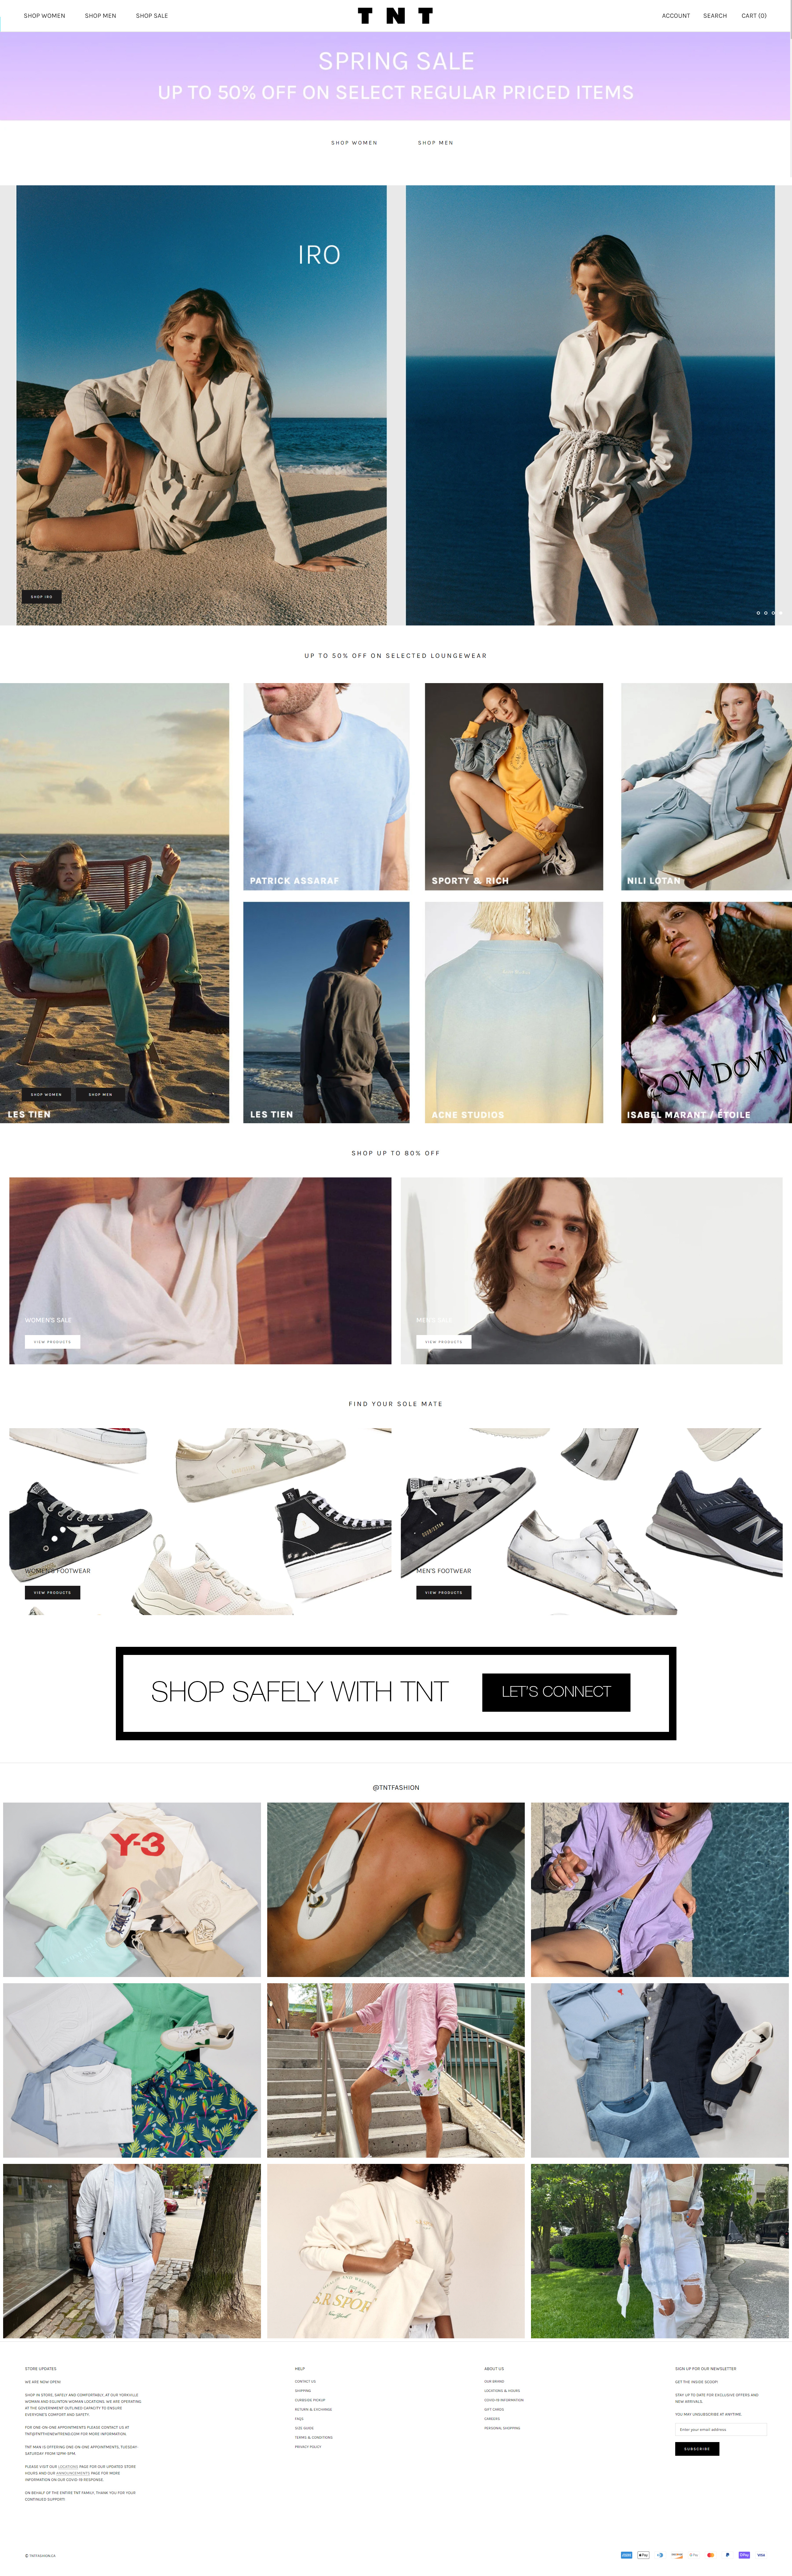 TNT fashion服饰购物网站设计